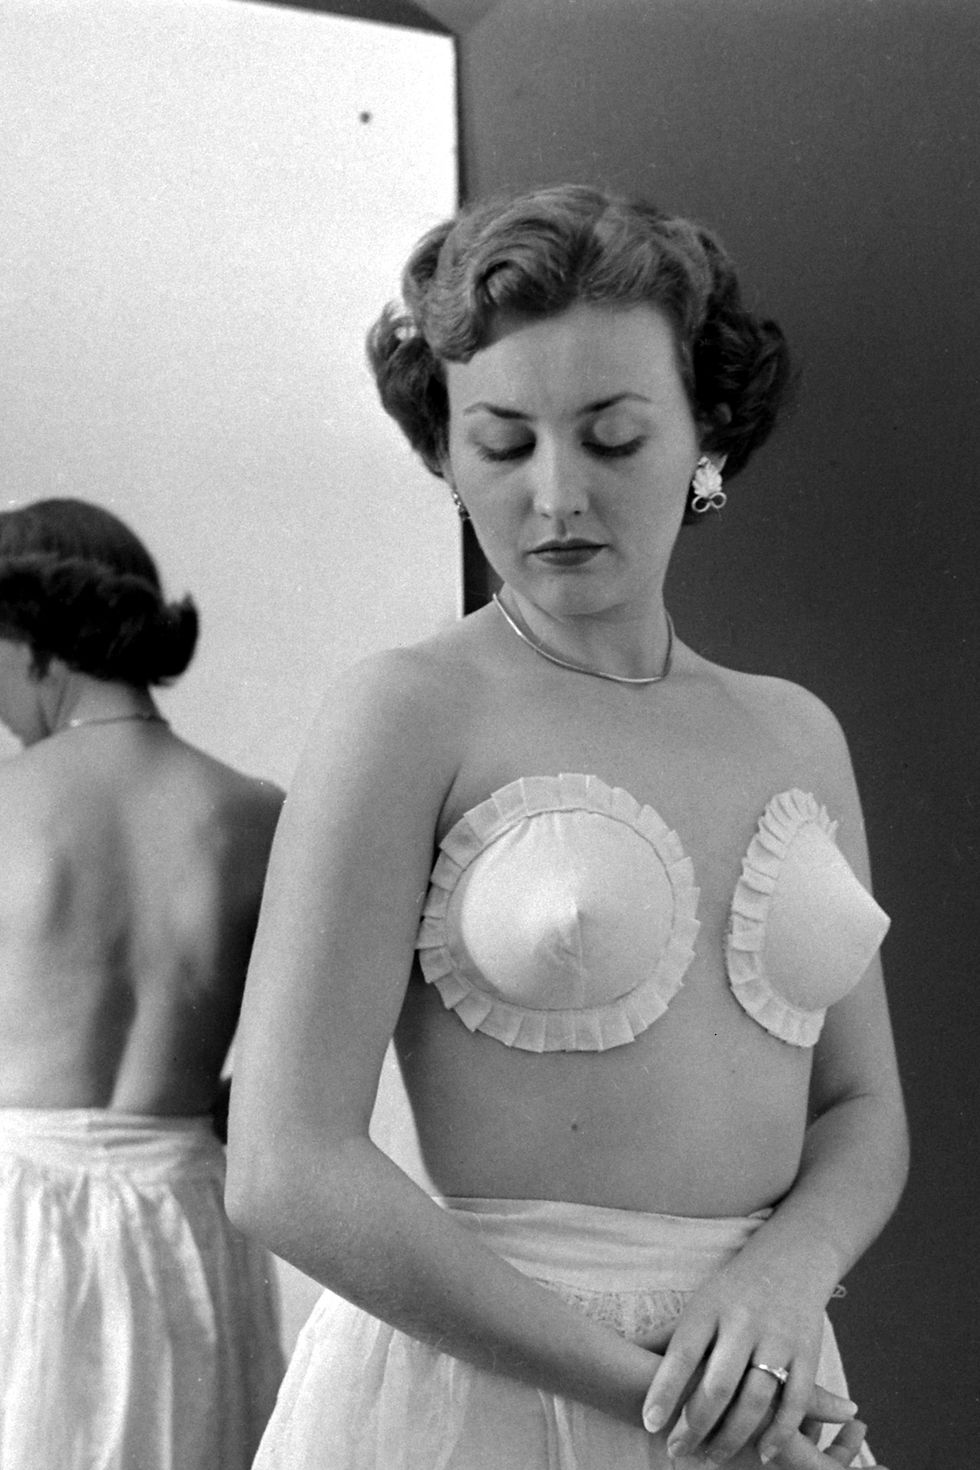 1950s Underwear 1950s Underwear Adverts of Fifties Corselette Girdles, Bras  & SlipsGirdles, Bras and Corselettes - Fashion Glamour History